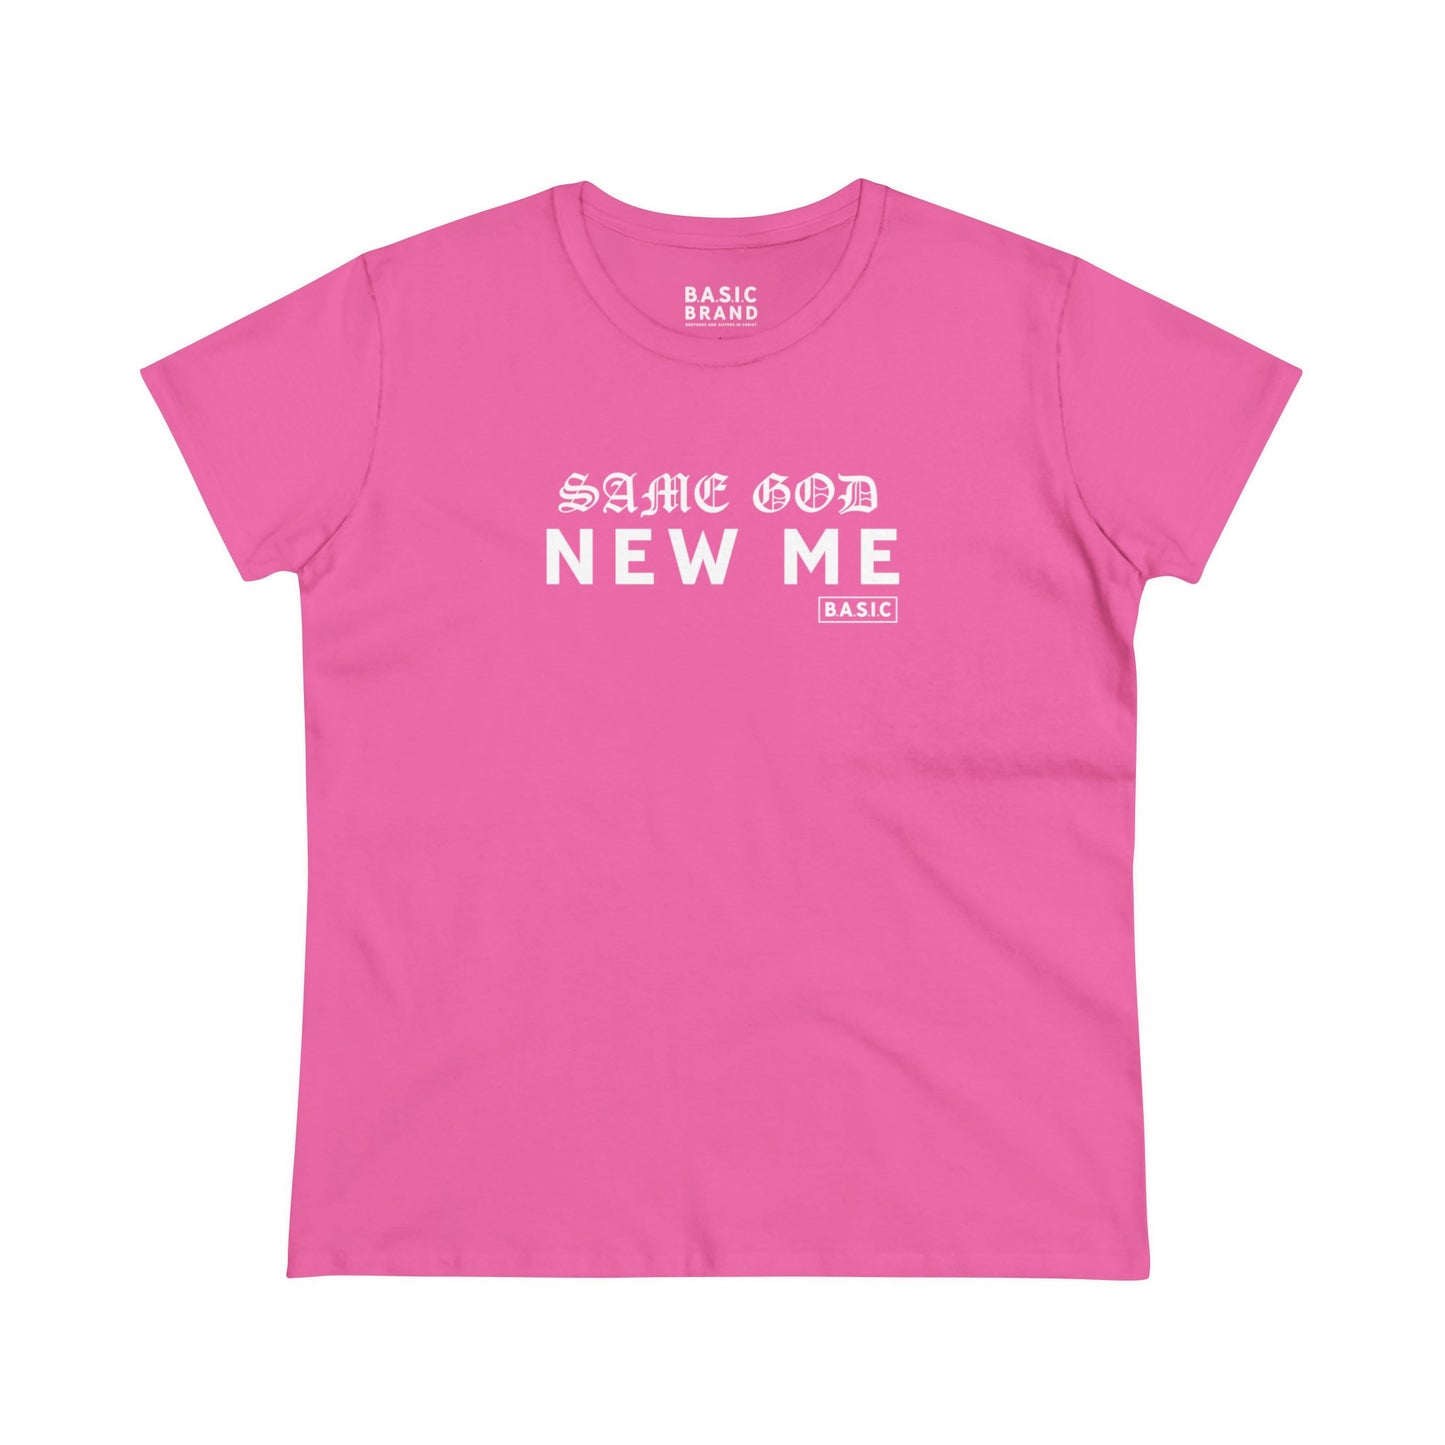 Women's B.A.S.I.C "Same God" Tee Shirt